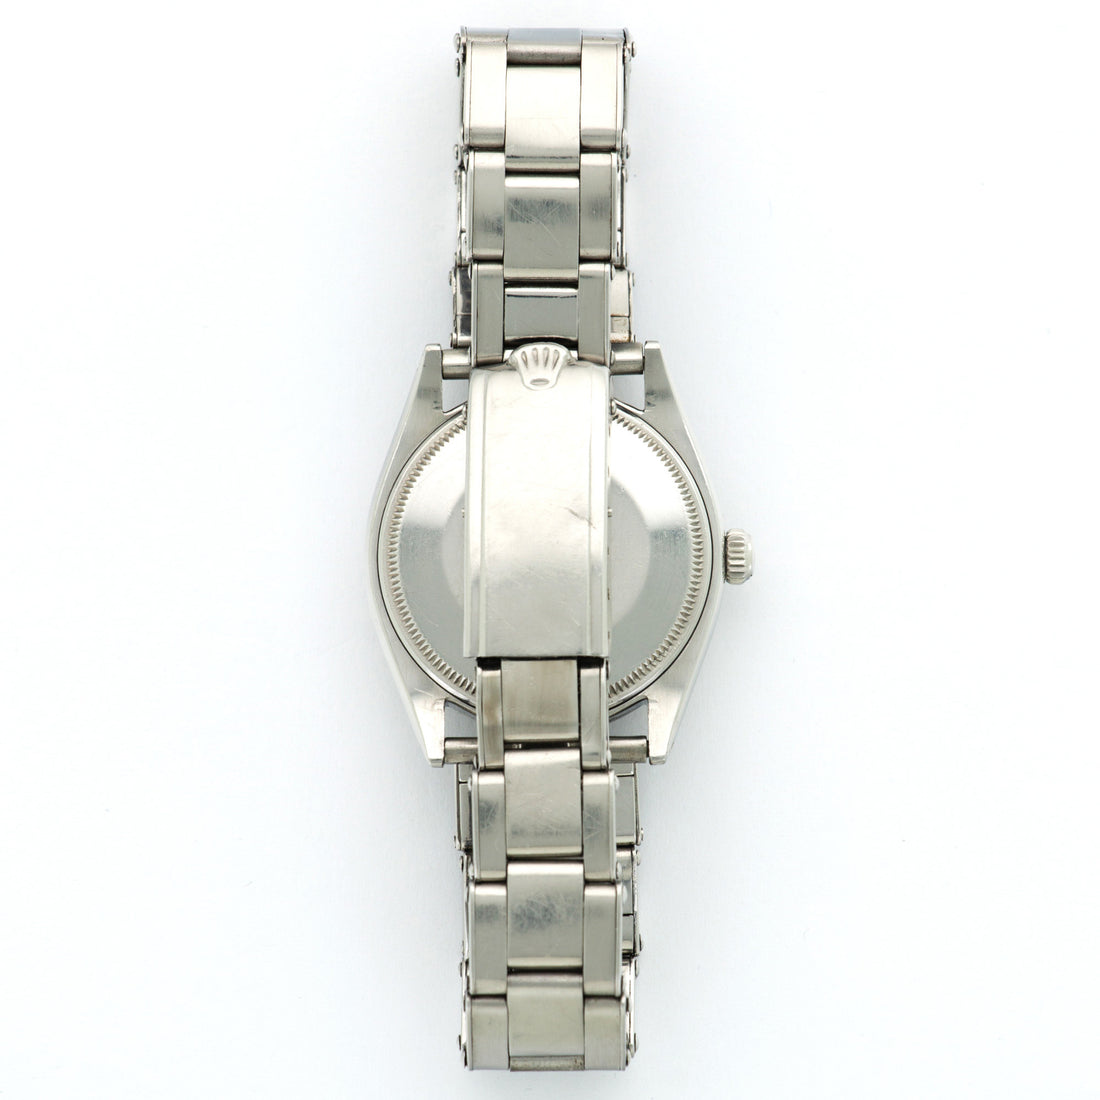 Rolex Oyster-Perpetual Explorer Watch Ref. 5500